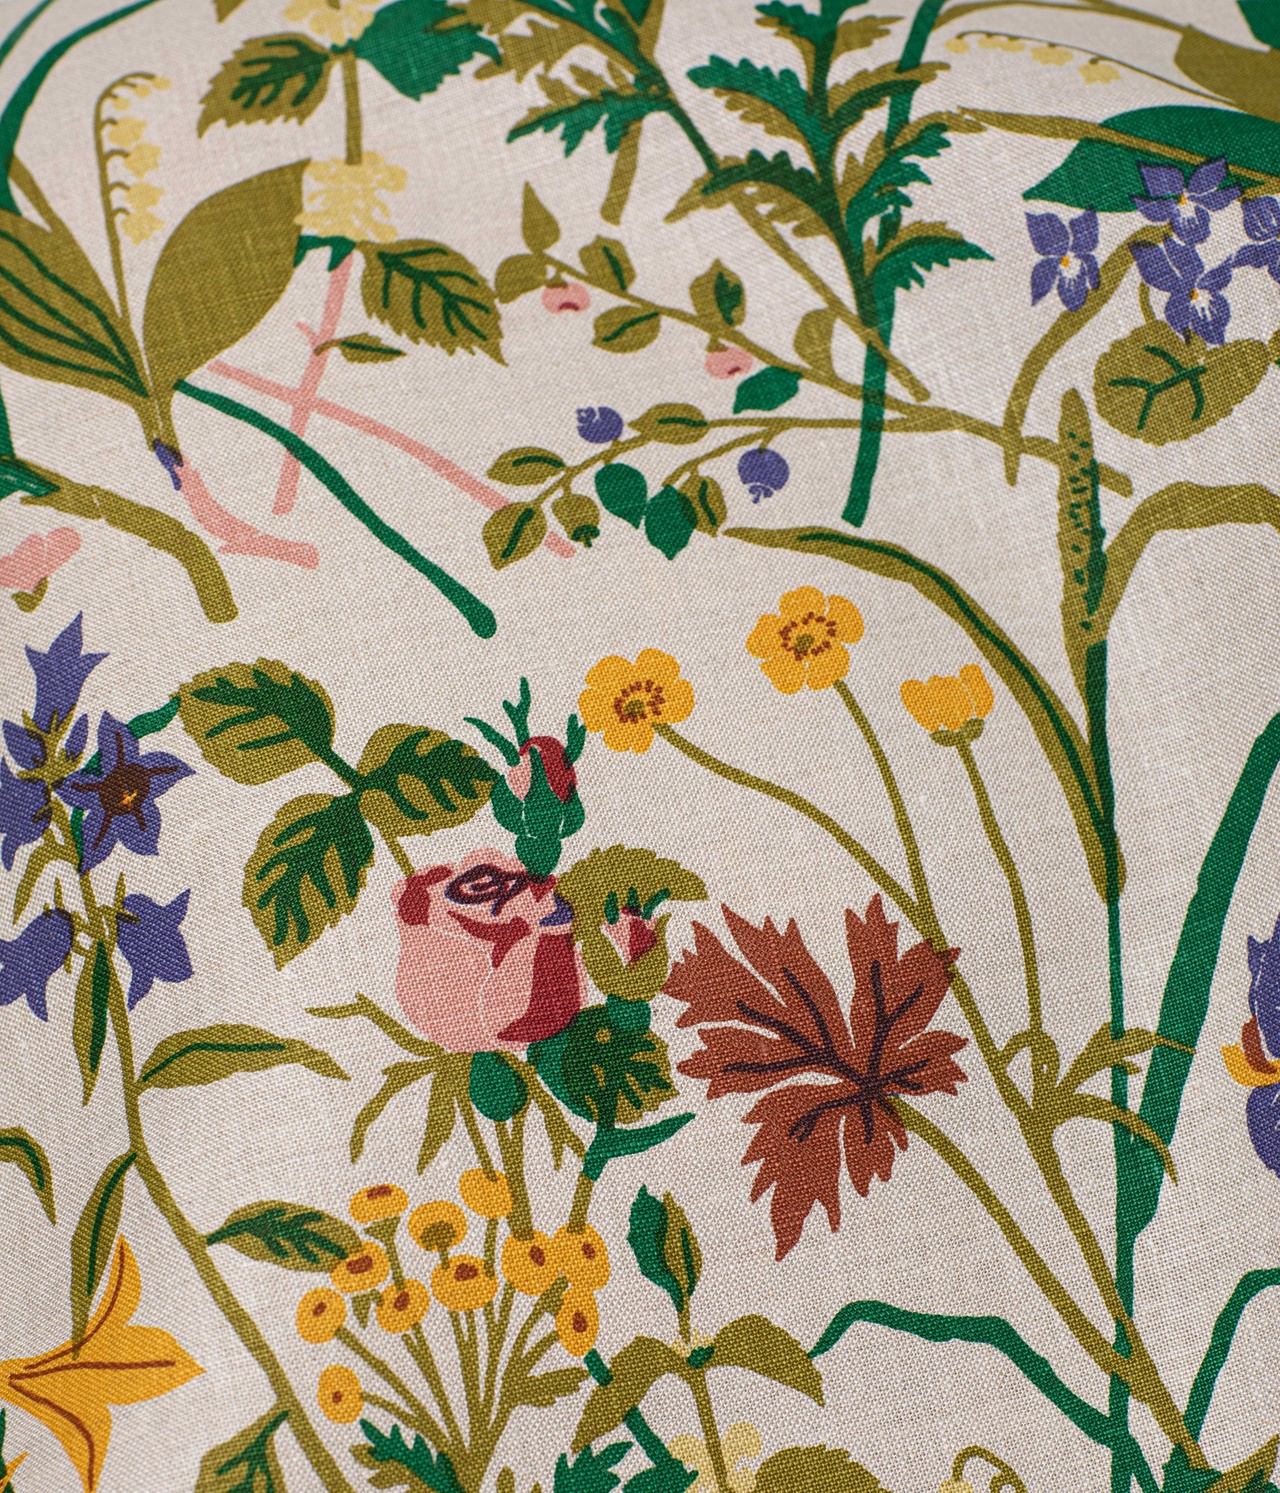 Sample Linen fabric ”Ros & Lilja” Naturalism